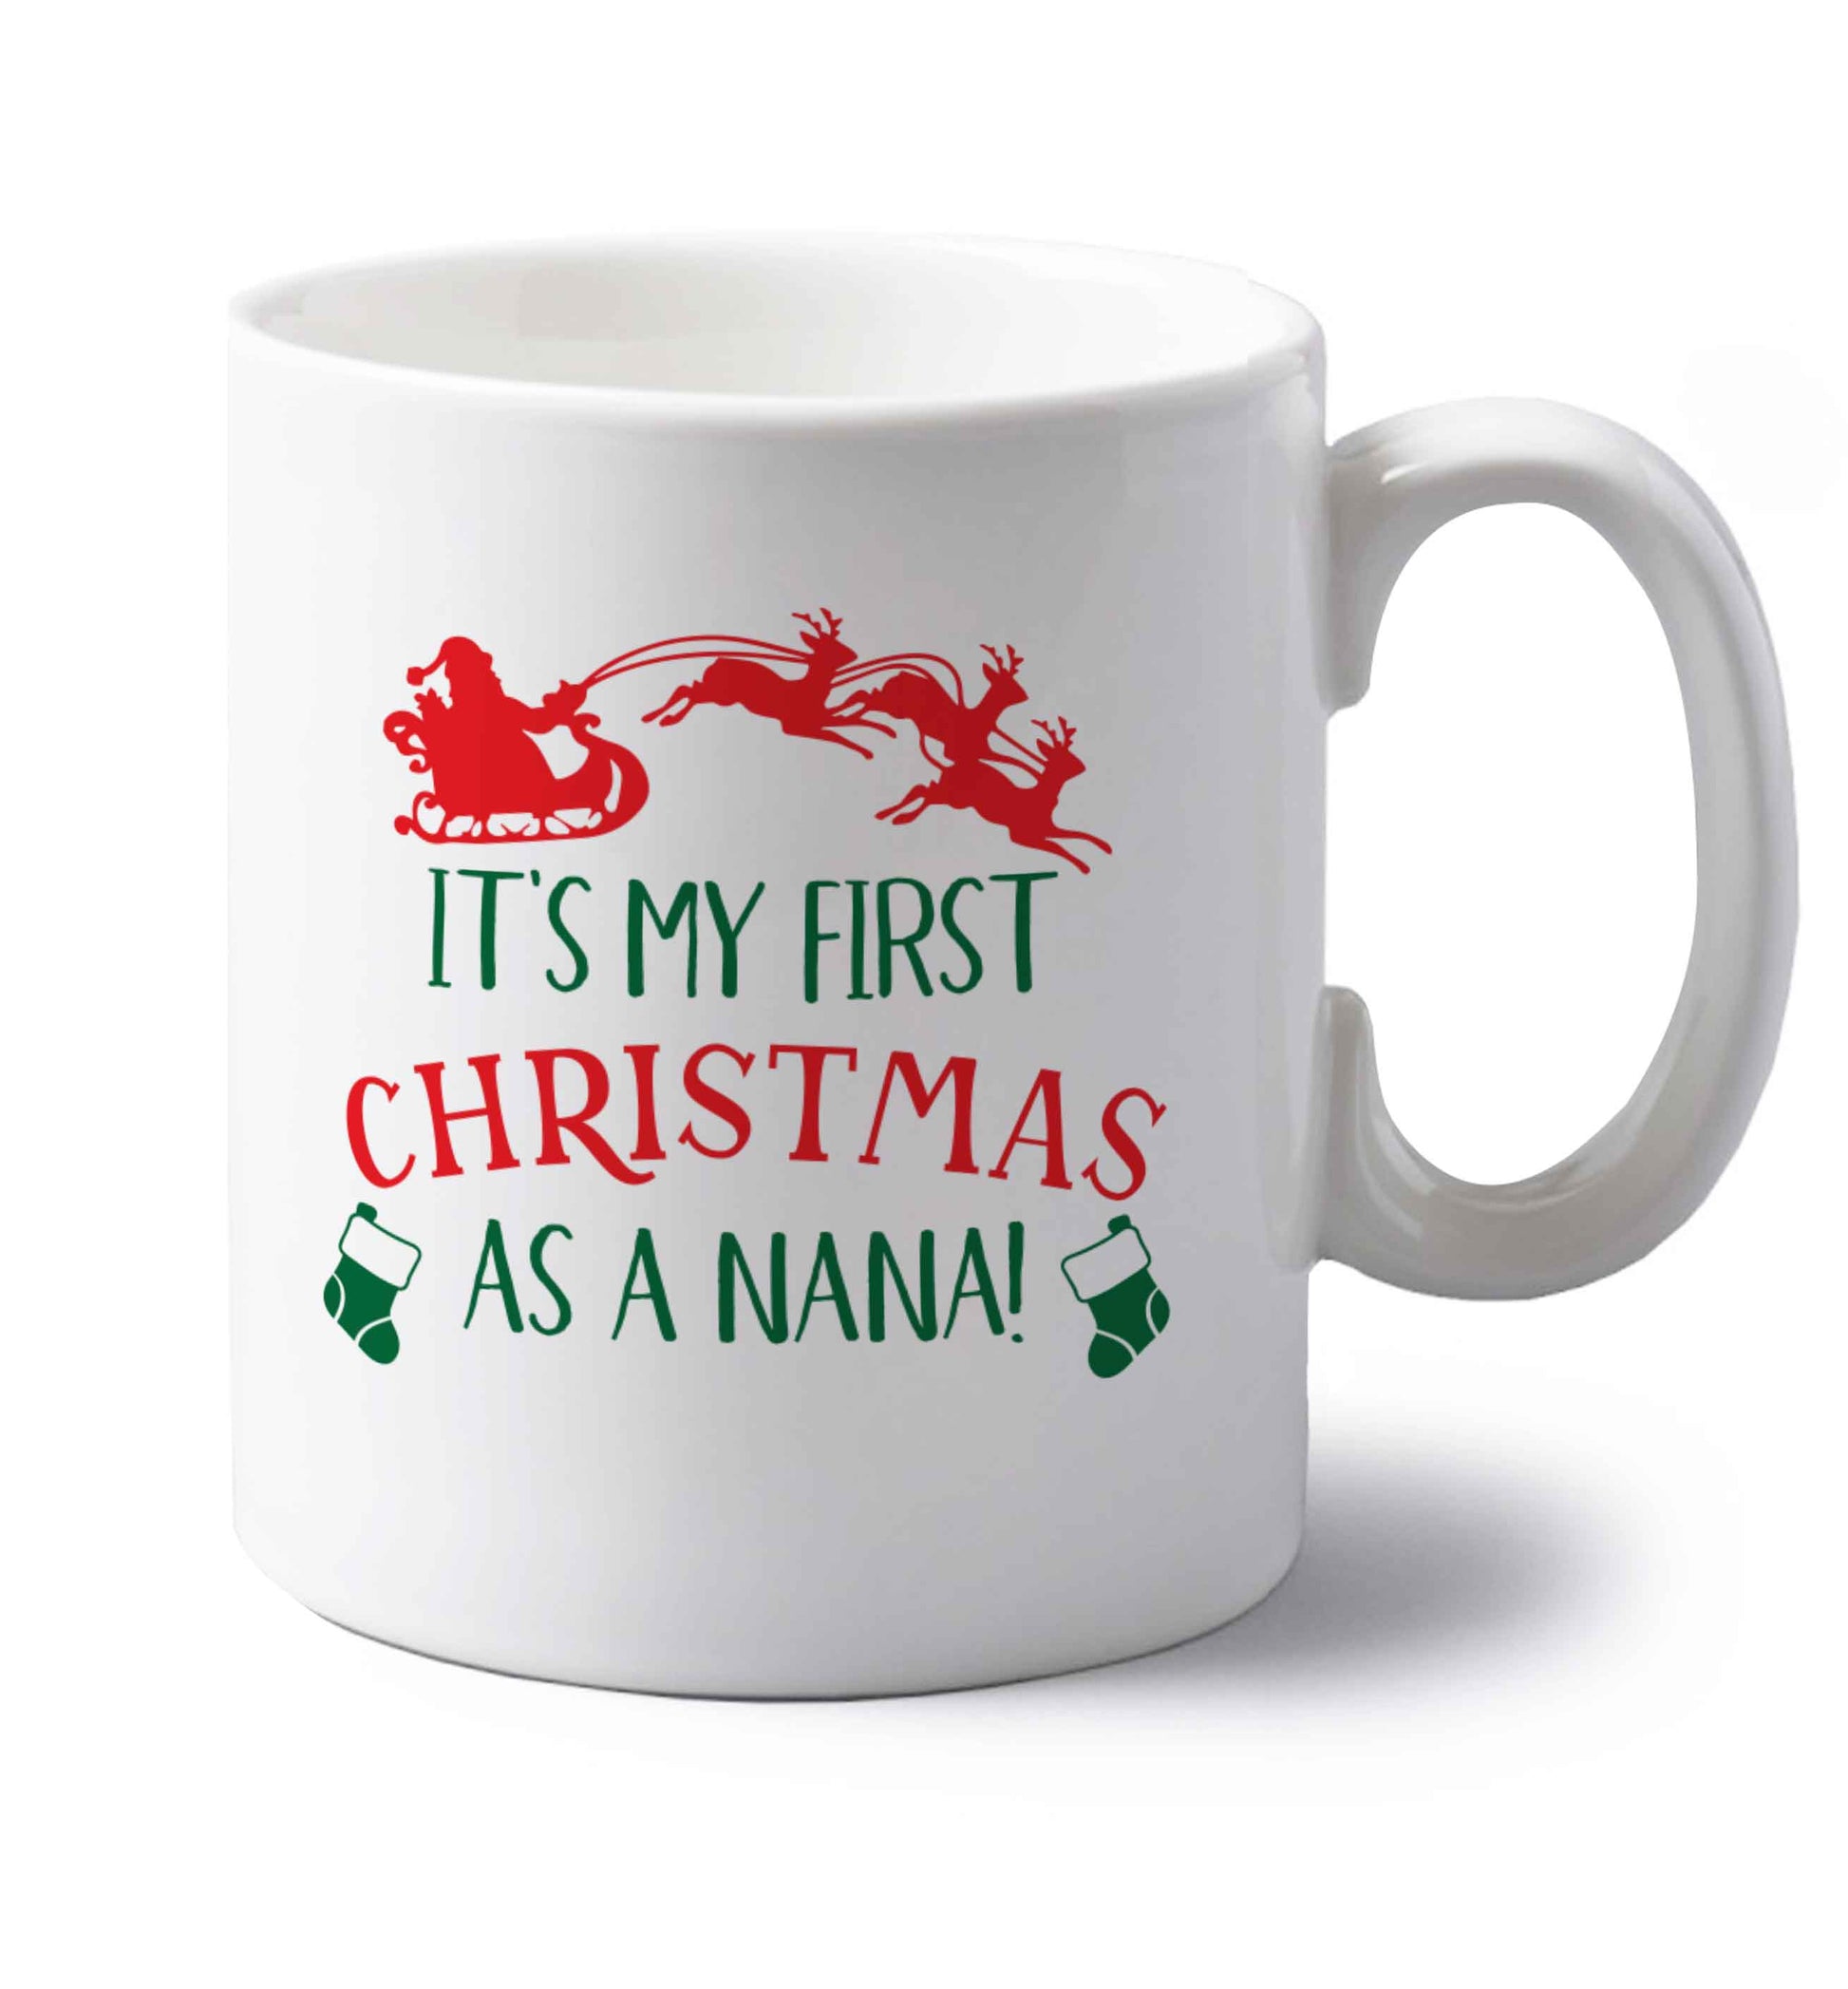 It's my first Christmas as a nana left handed white ceramic mug 